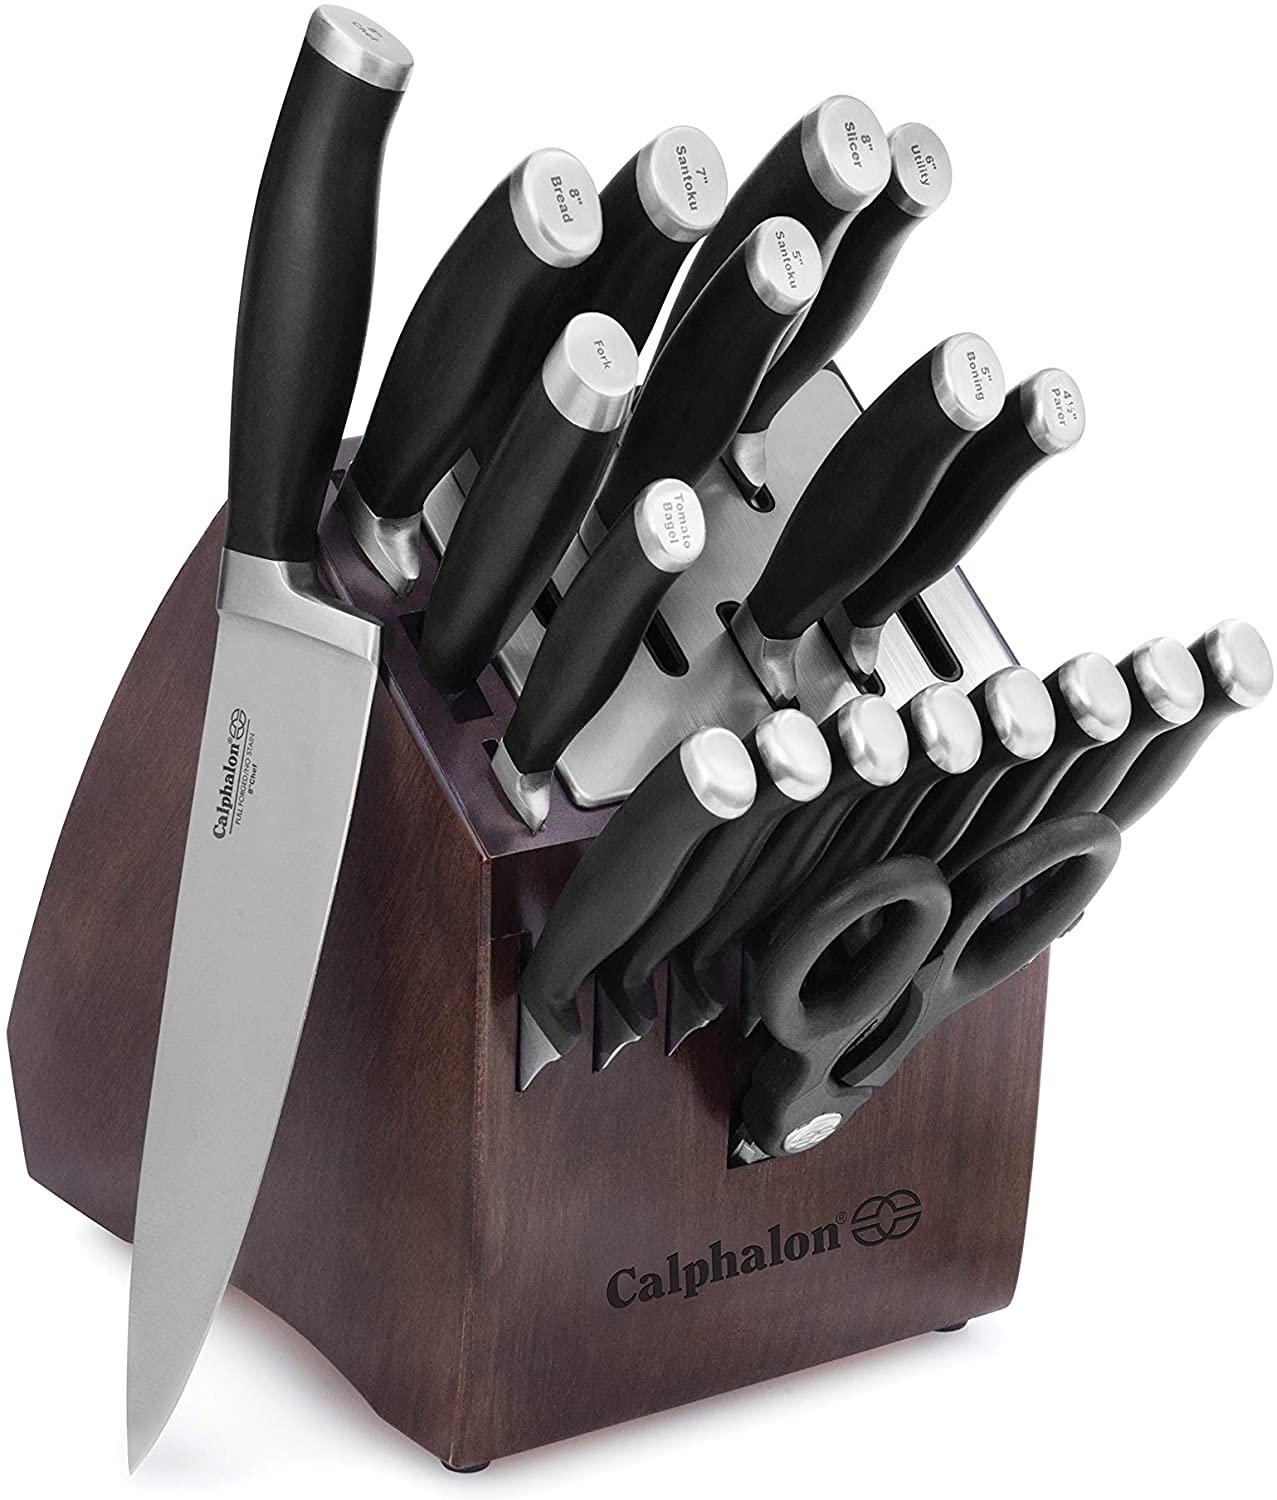 Calphalon Knives — a Cautionary Tale